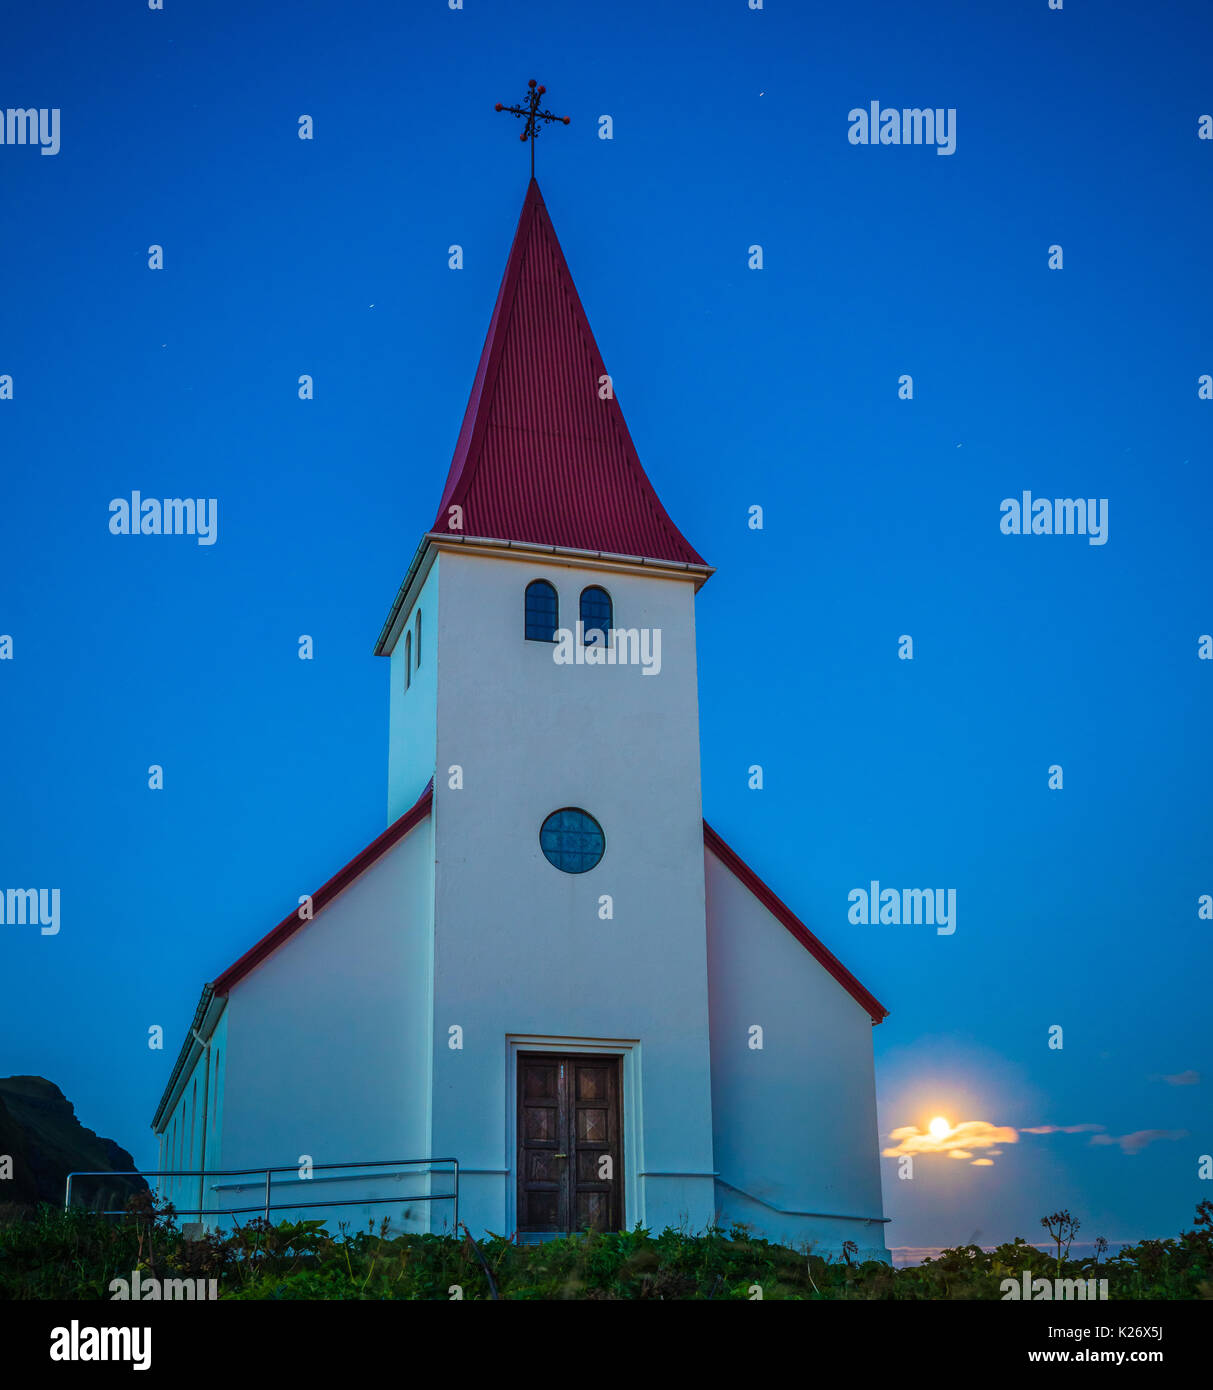 Iglesia luterana en VIK, Islandia Foto de stock